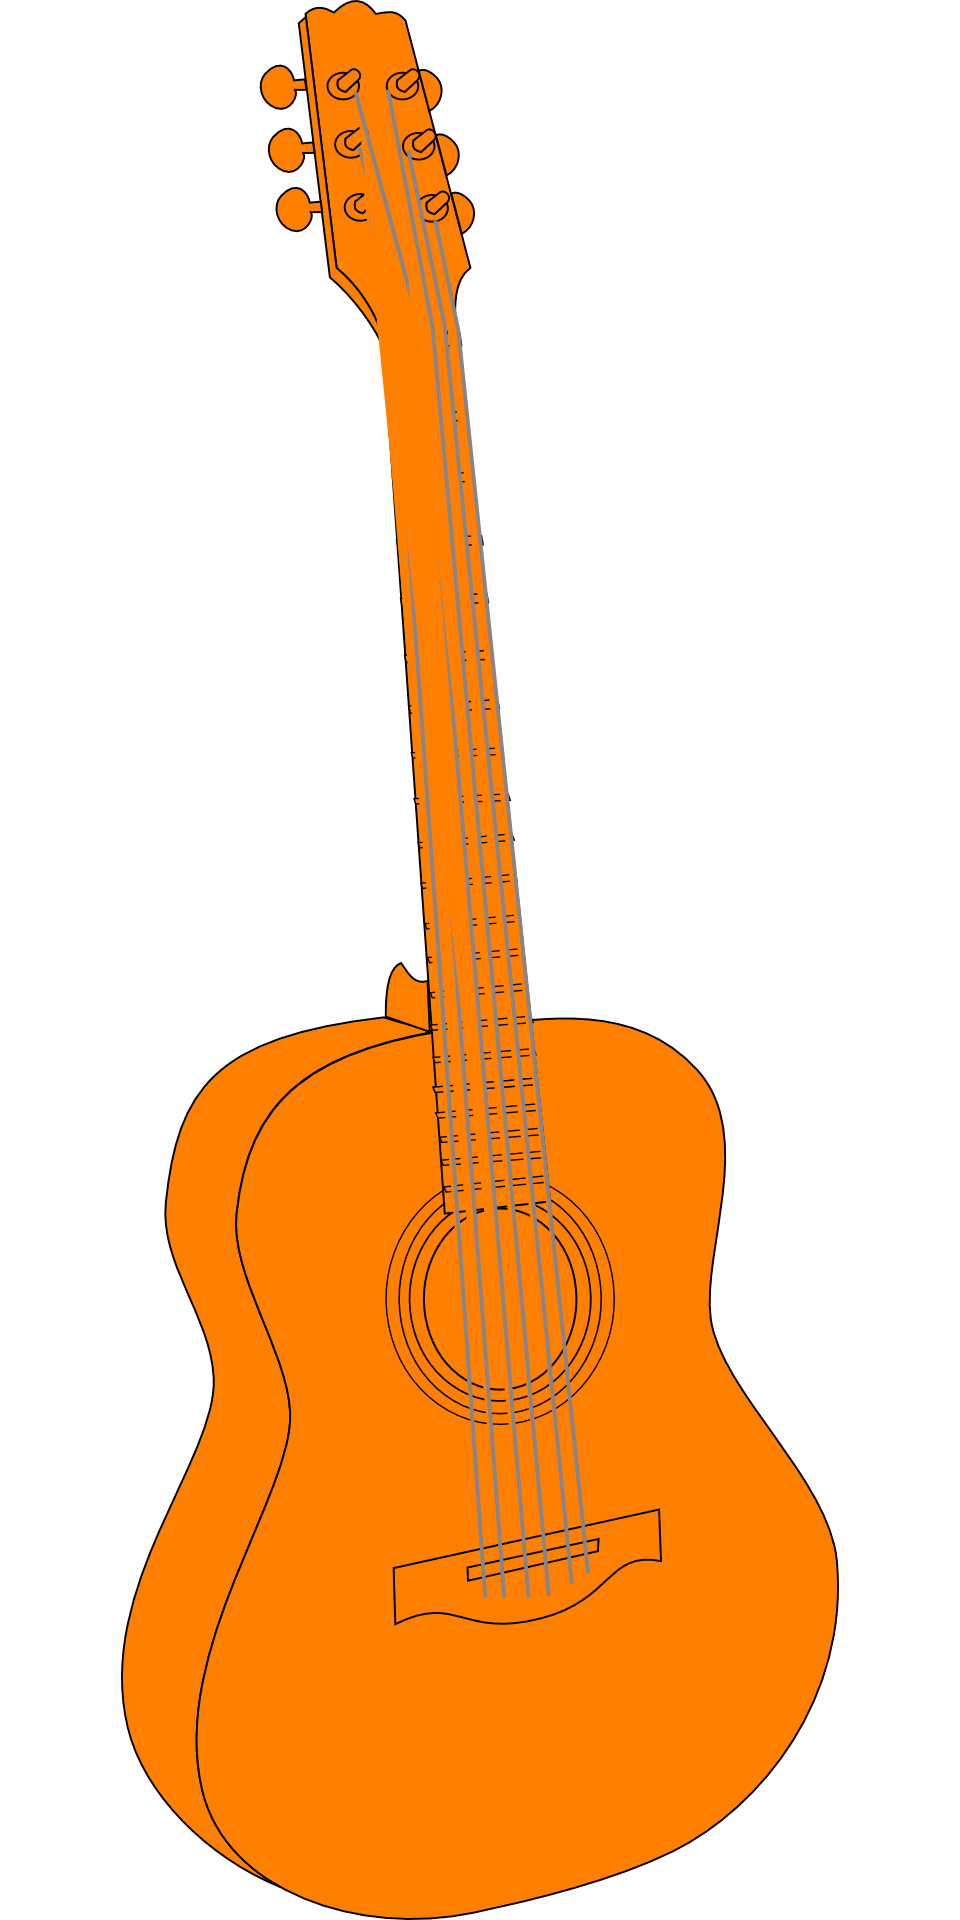 Acoustic musical instrument drawing. Clipart guitar orange guitar